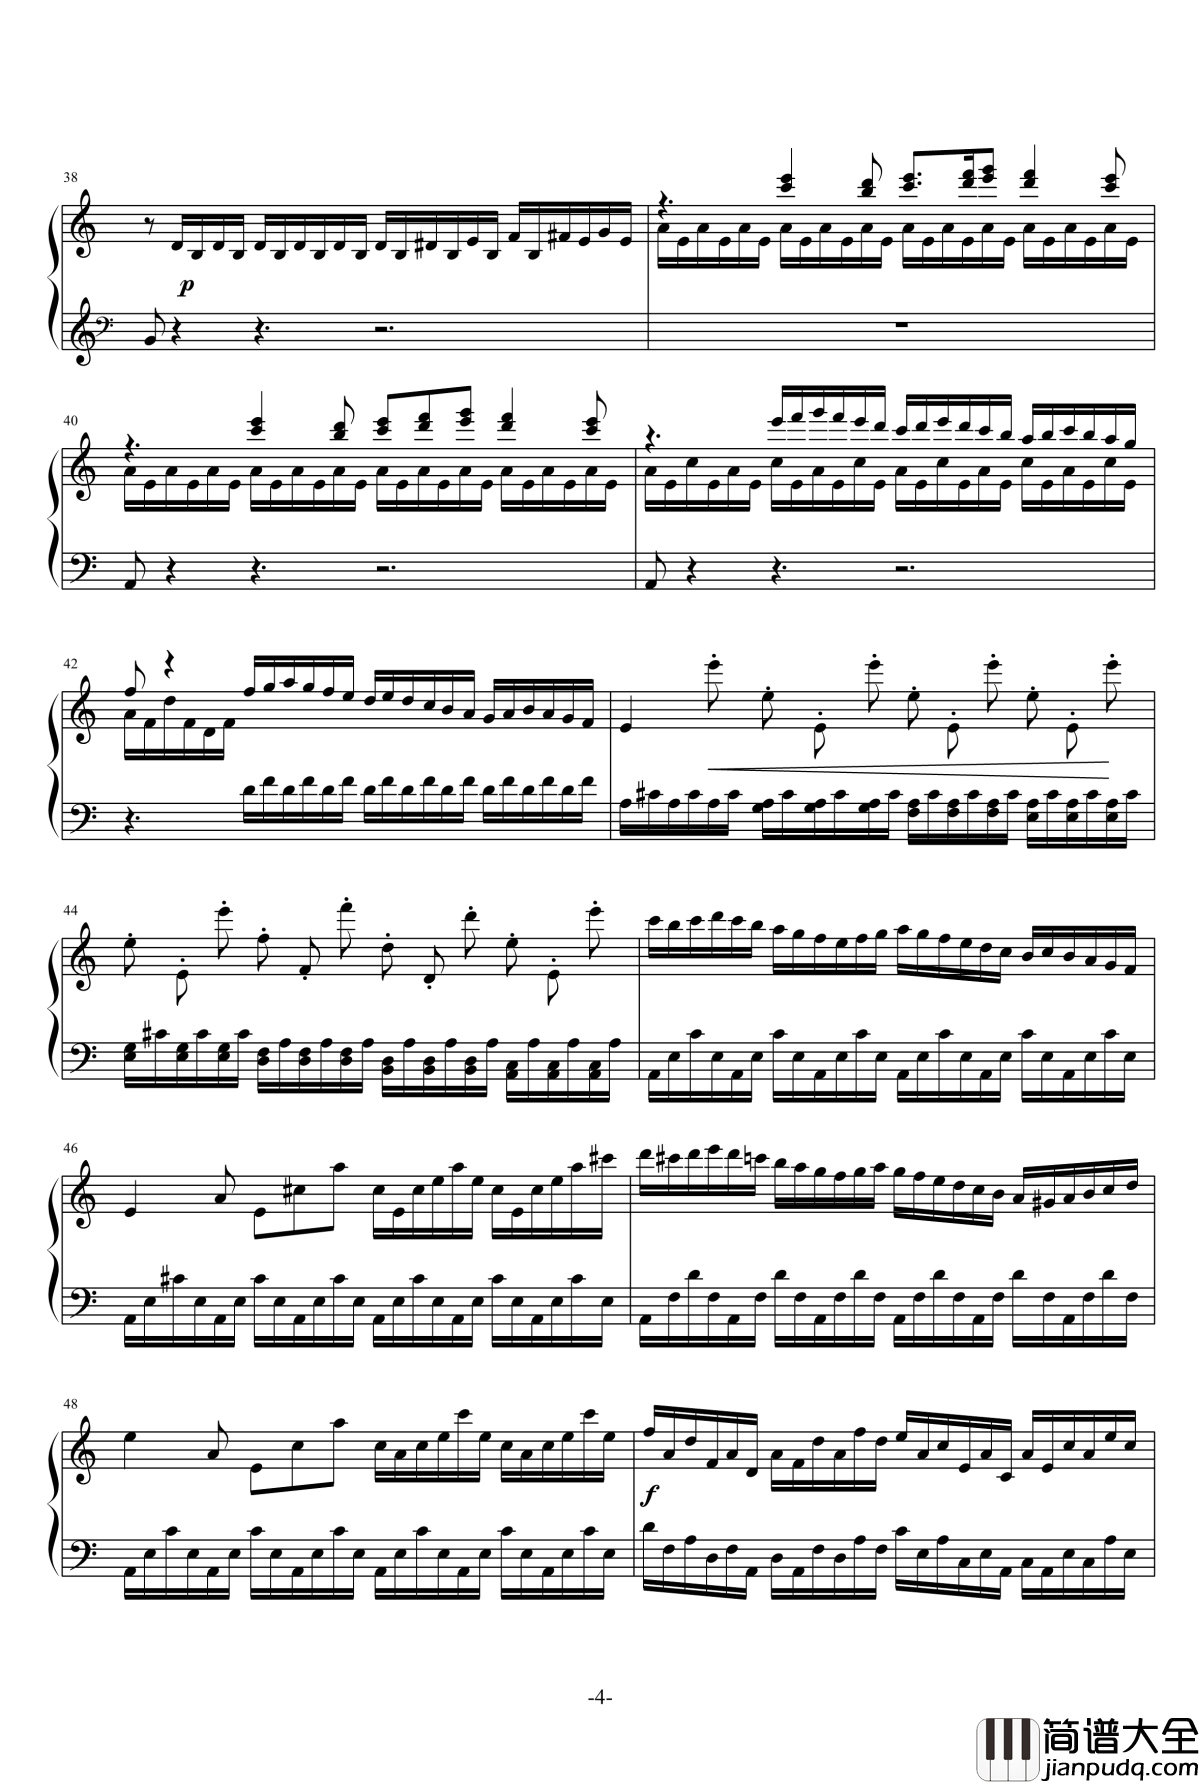 a小调第3号练习曲钢琴谱_乐之琴